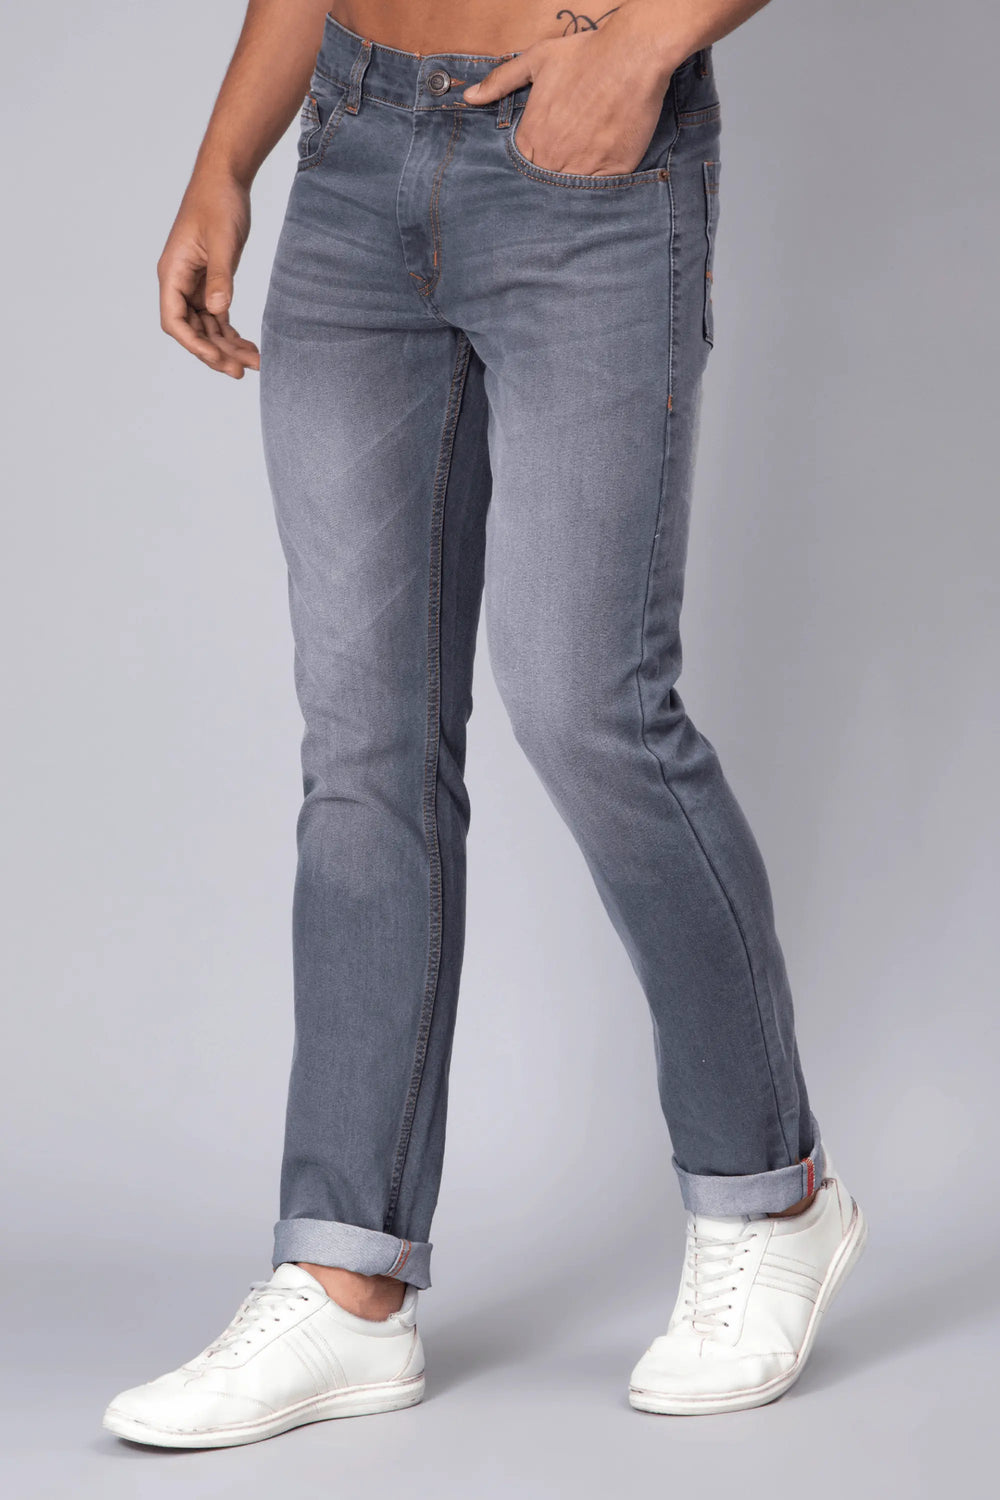 Slim Tapered Fit Grey Stretchable Premium Denim Jeans - Peplos Jeans 